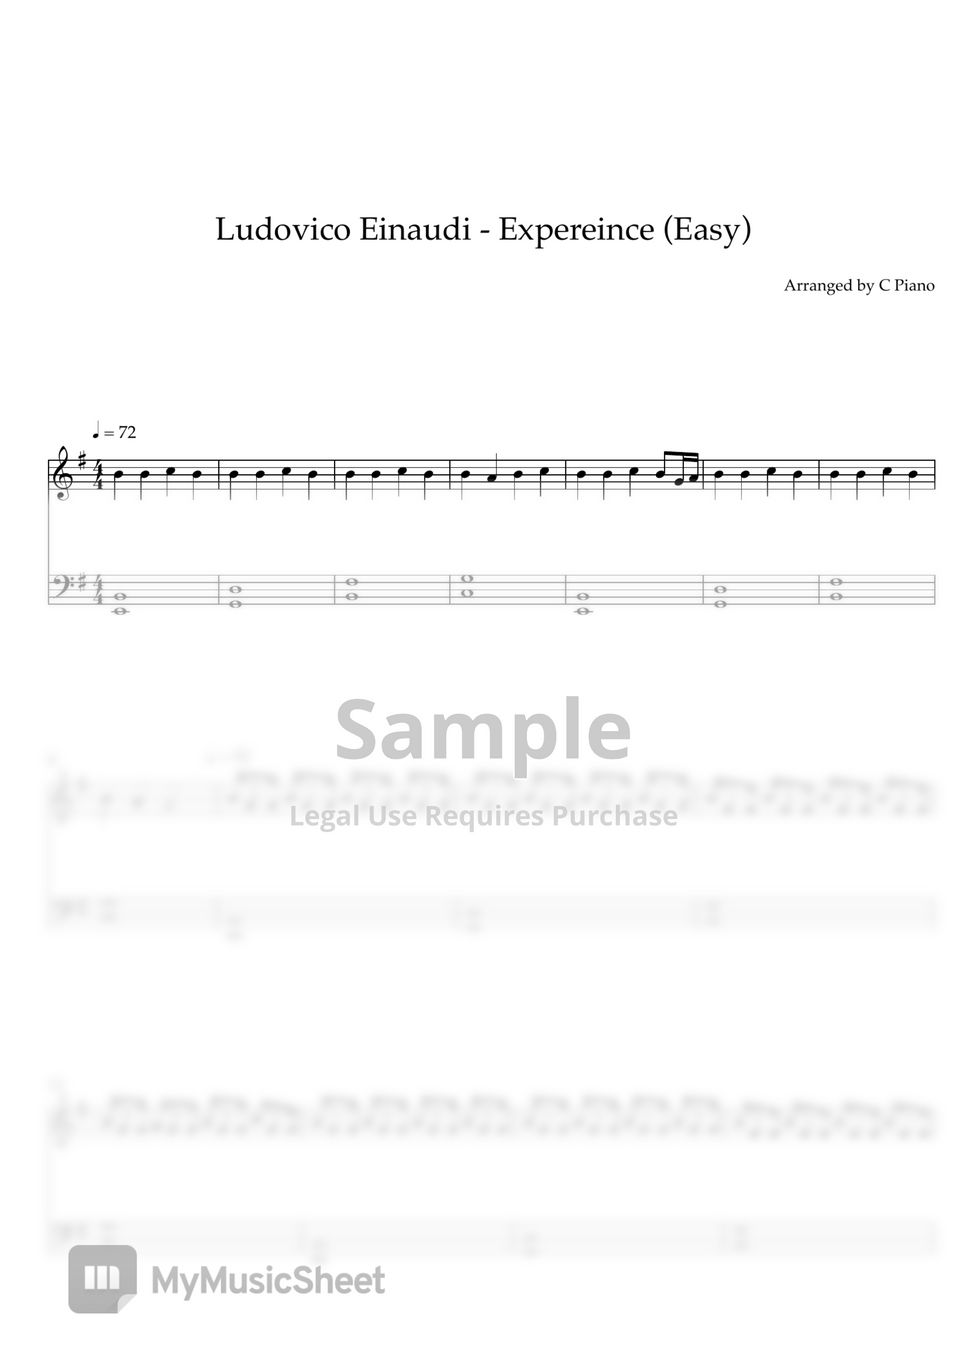 Ludovico Einaudi - Experience (Easy Version) by C Piano